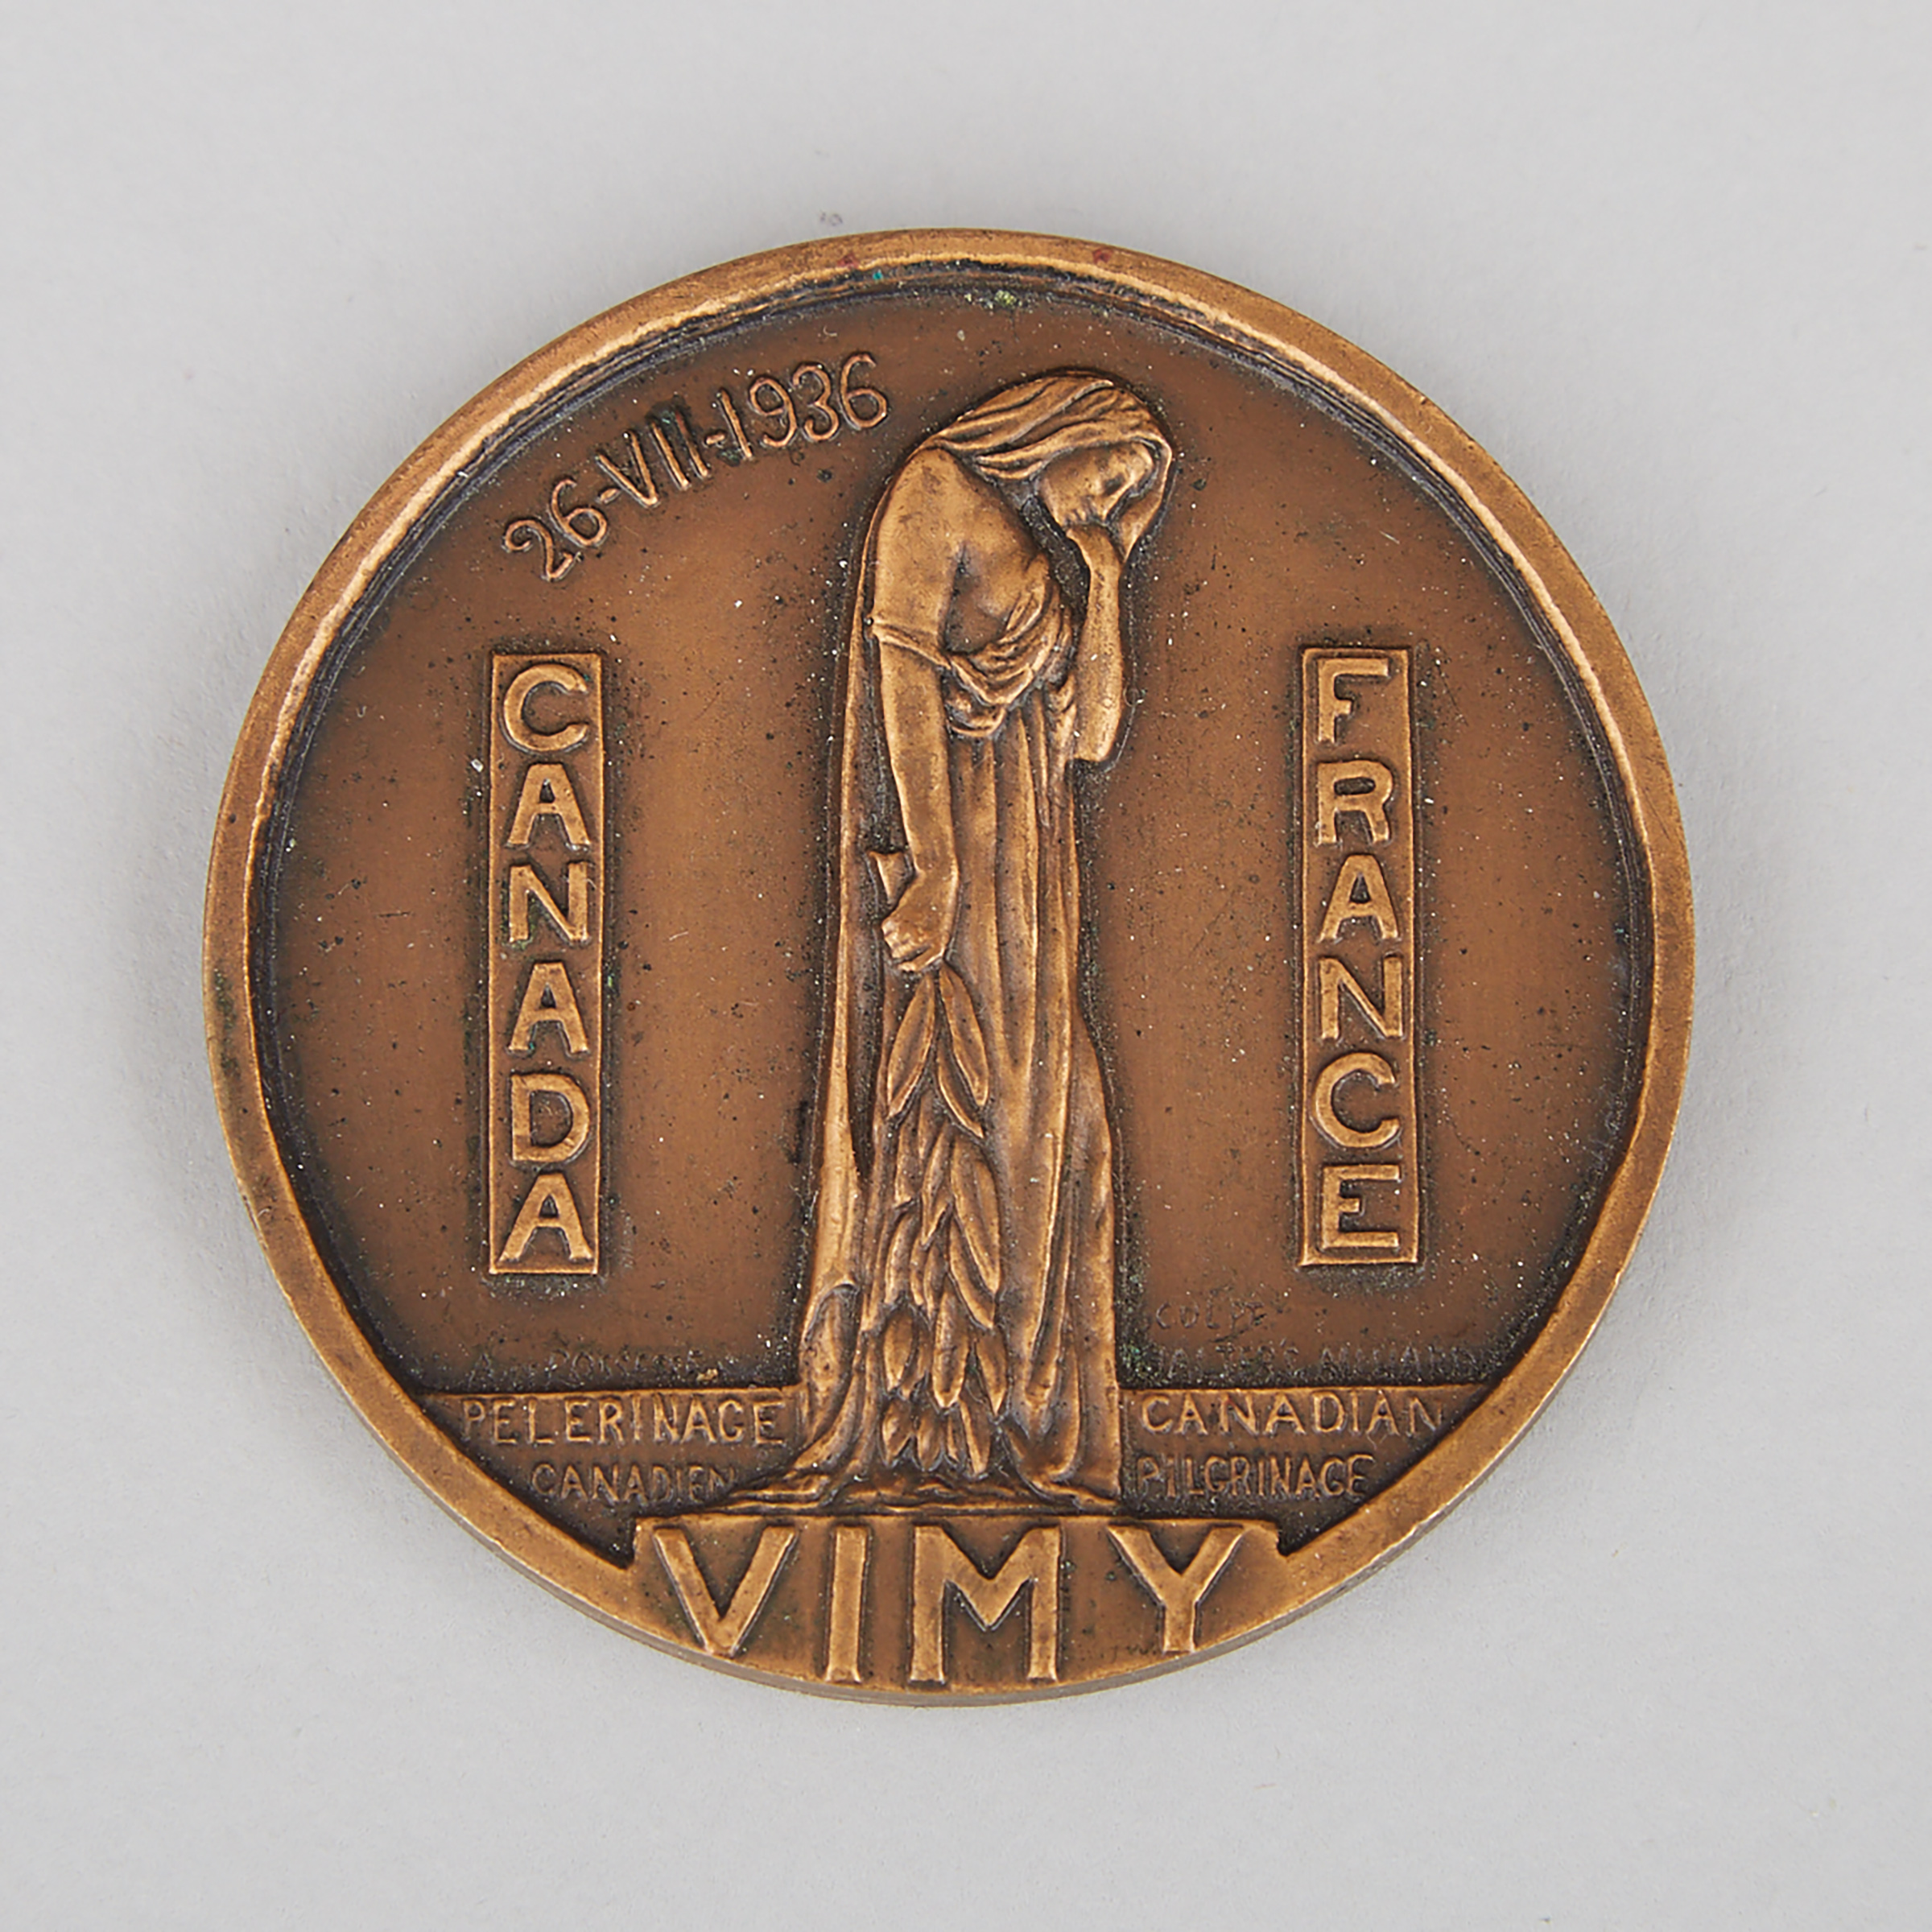 Canadian National Vimy Memorial Pilgrimage Medallion, 1936